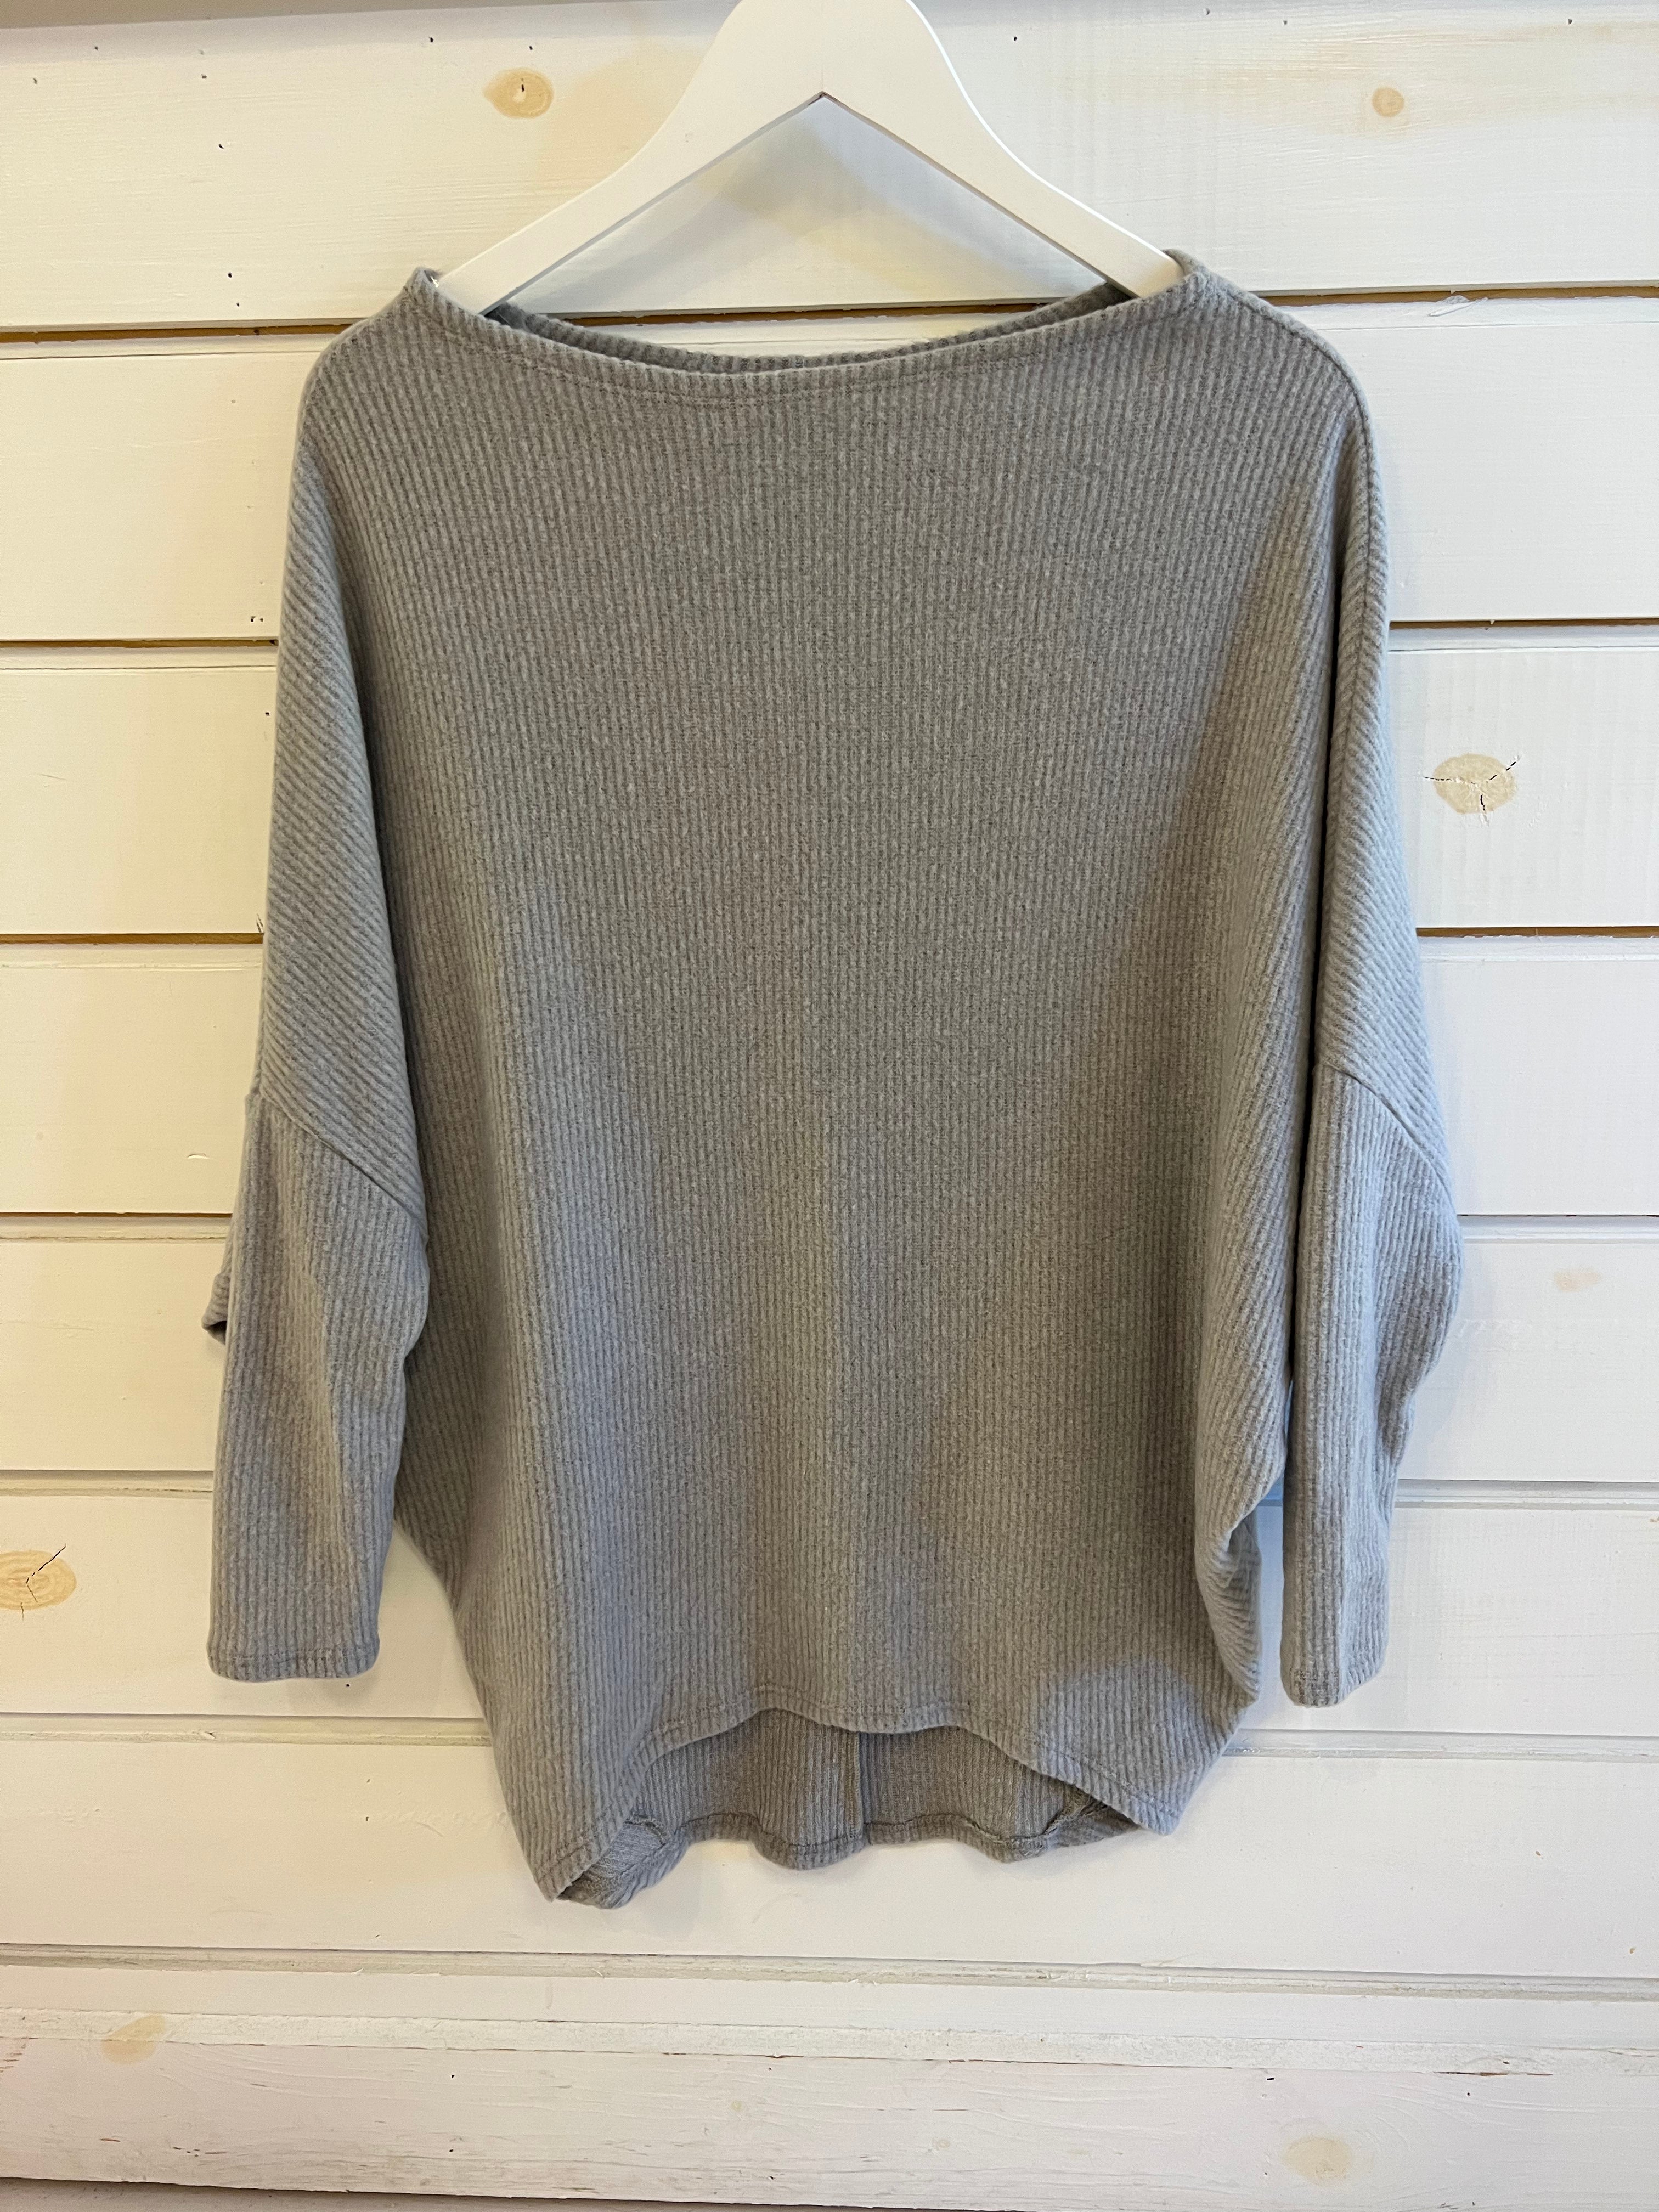 gray knit top